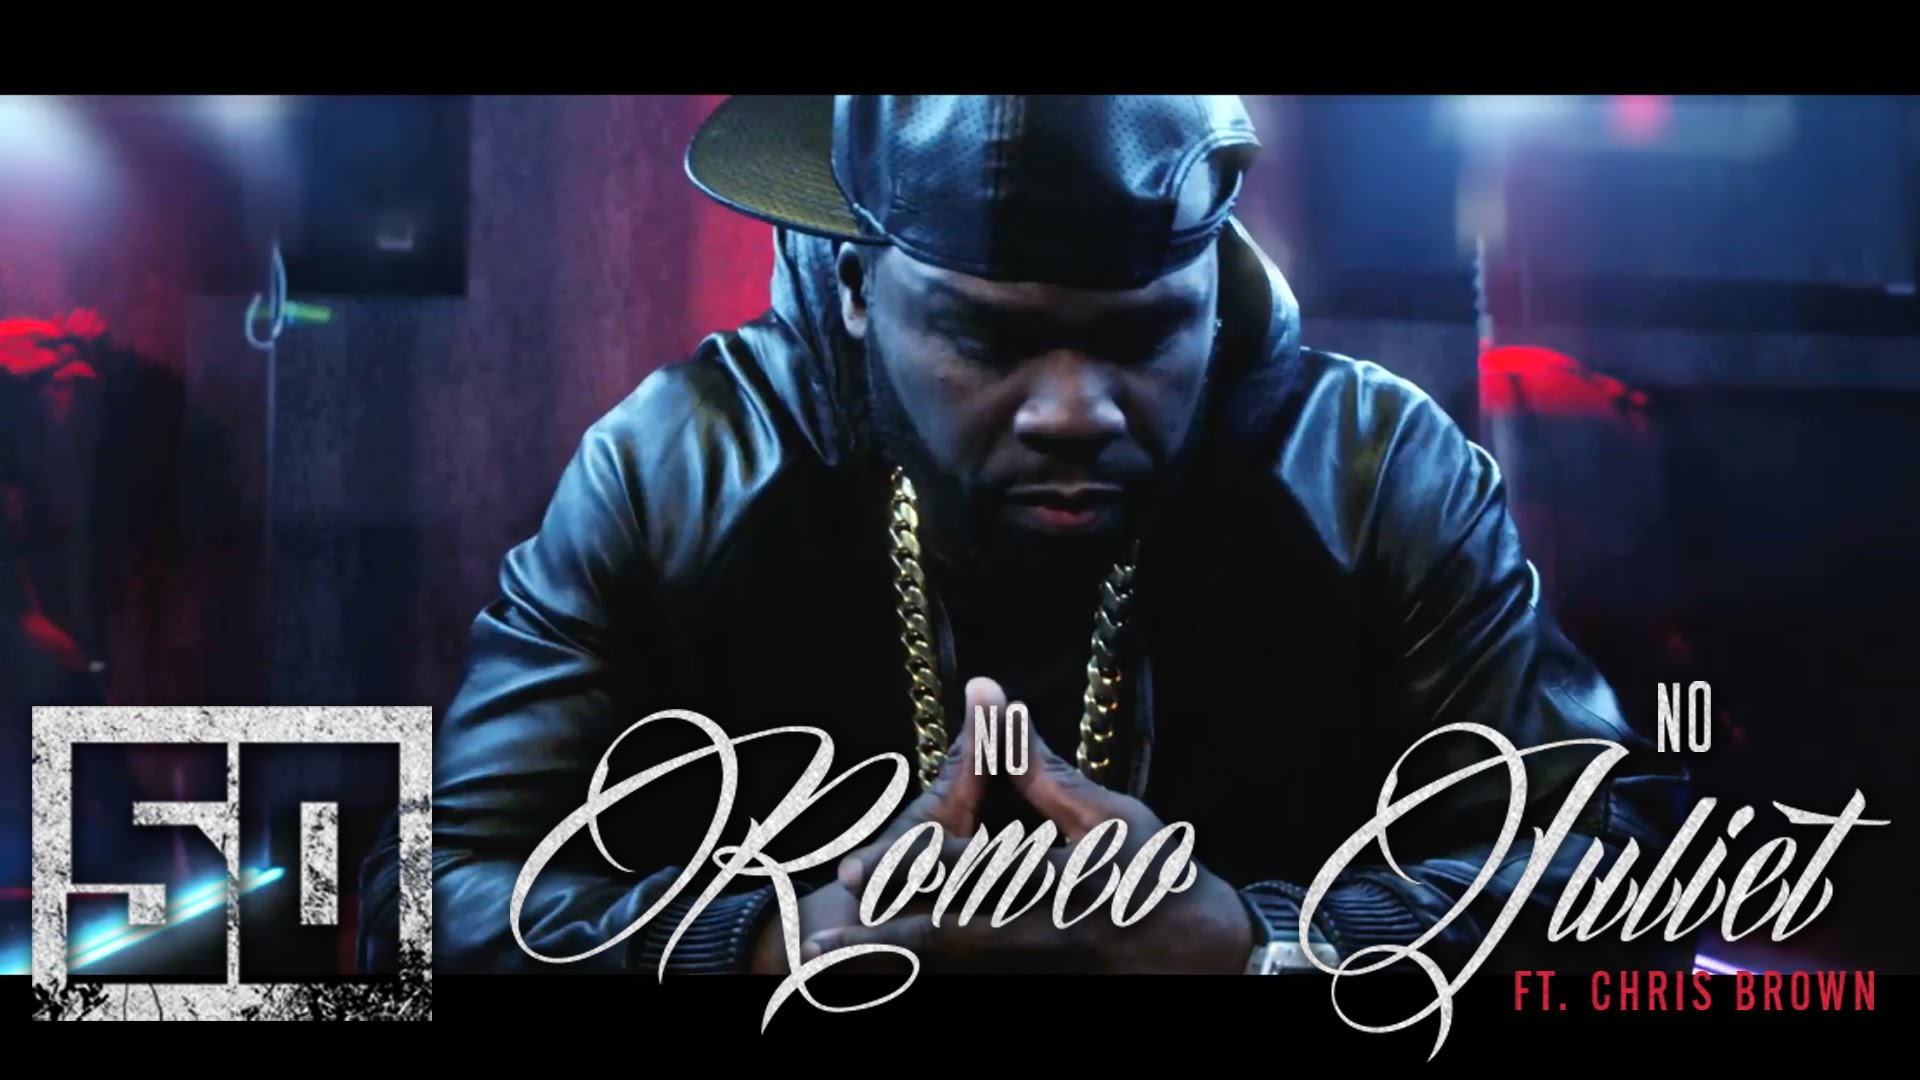 50 Cent ft. Chris Brown – “No Romeo No Juliet” (Video)